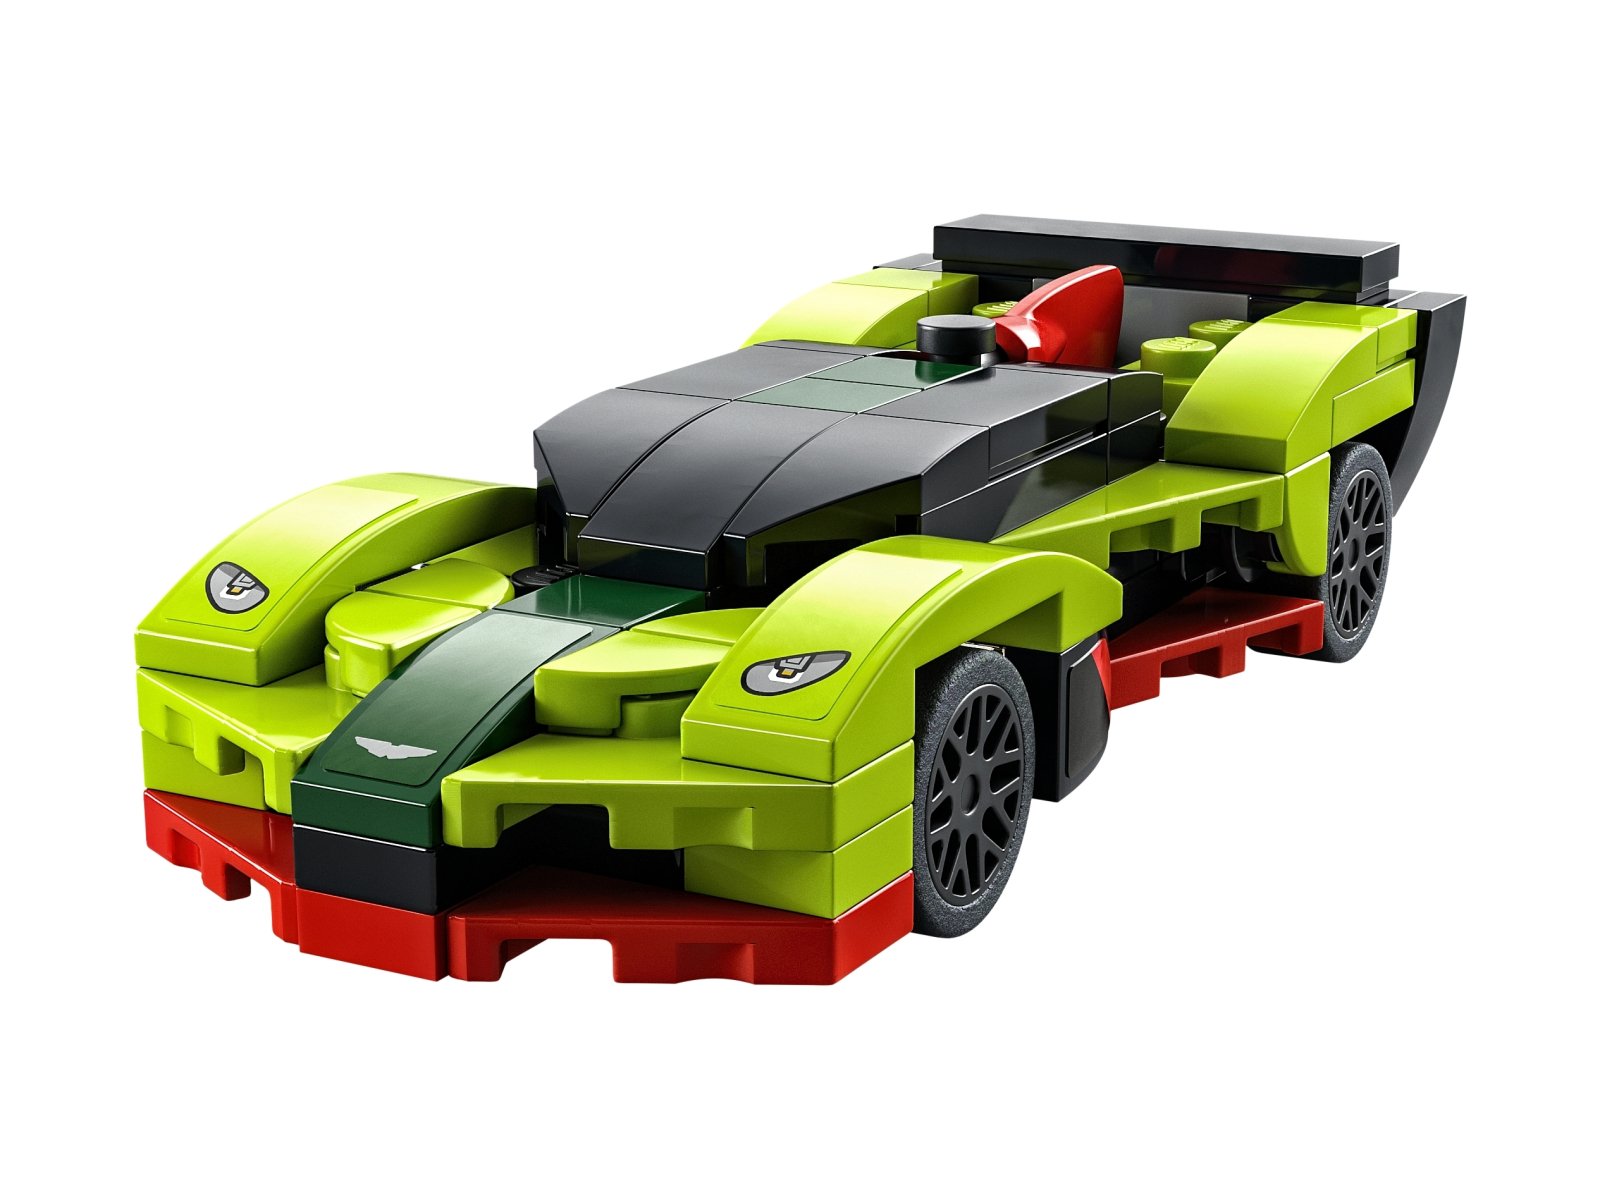 LEGO 30434 Speed Champions Aston Martin Valkyrie AMR Pro